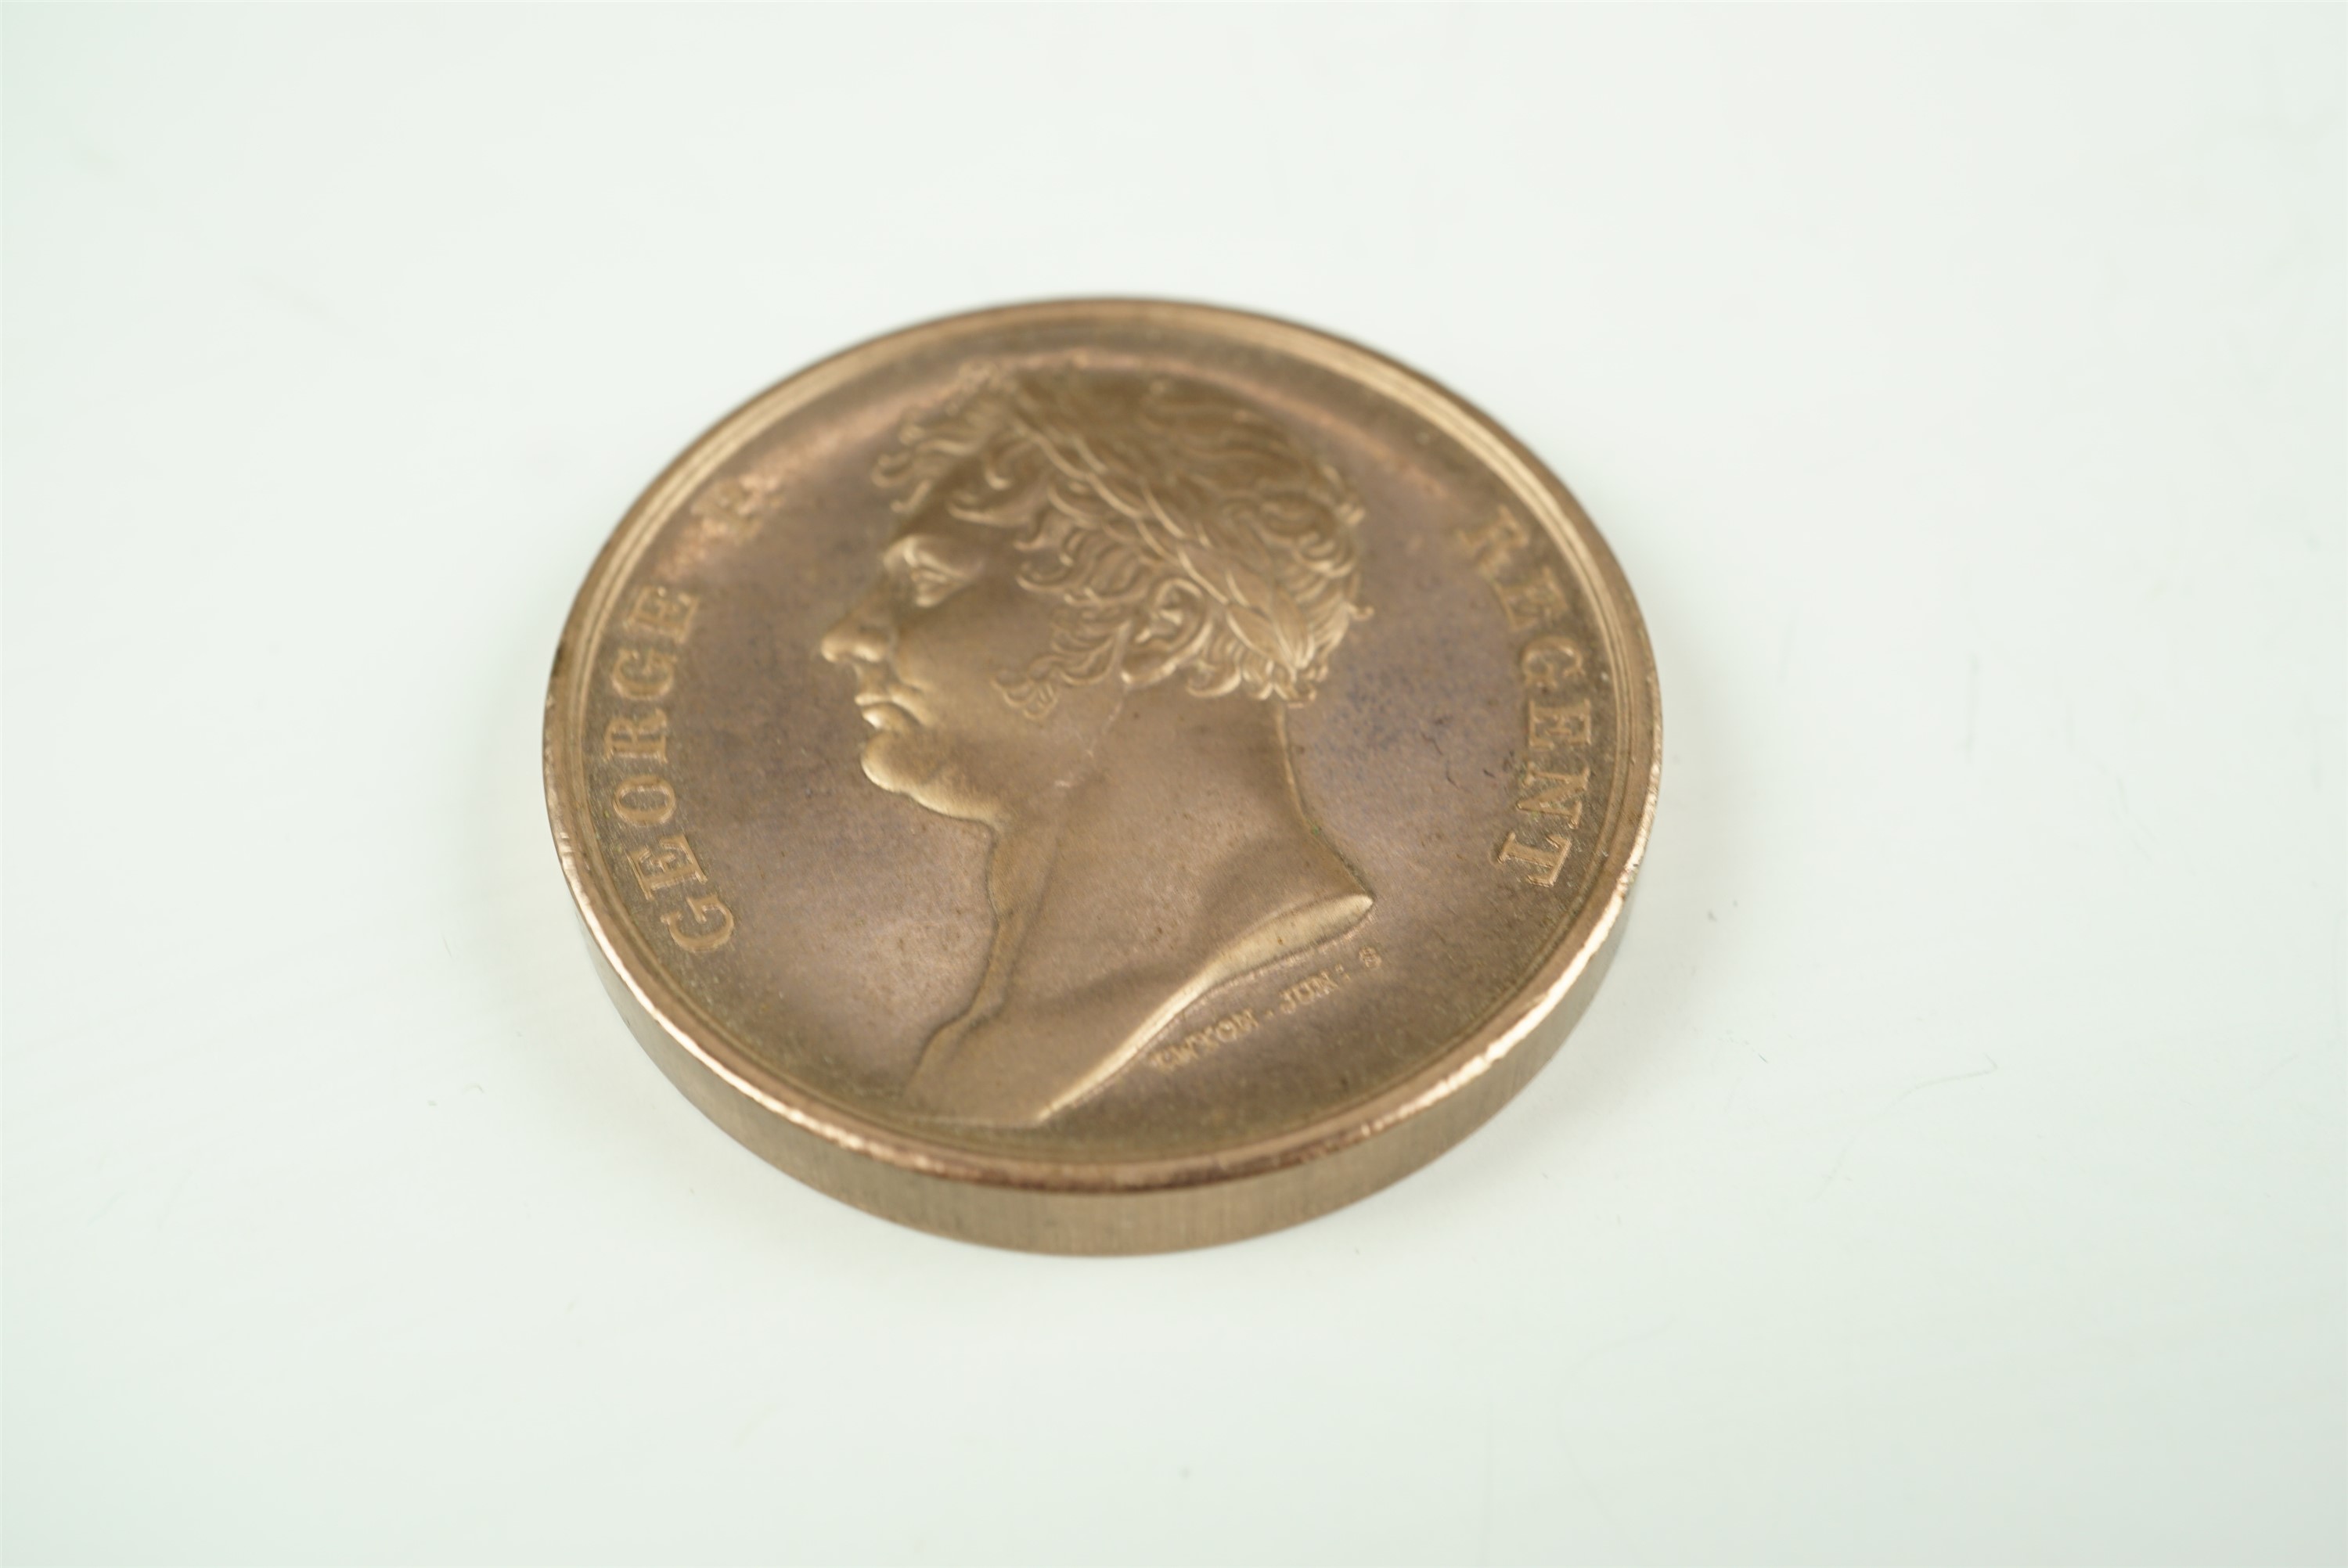 A bronze replica Wyon Waterloo medal, 35 mm